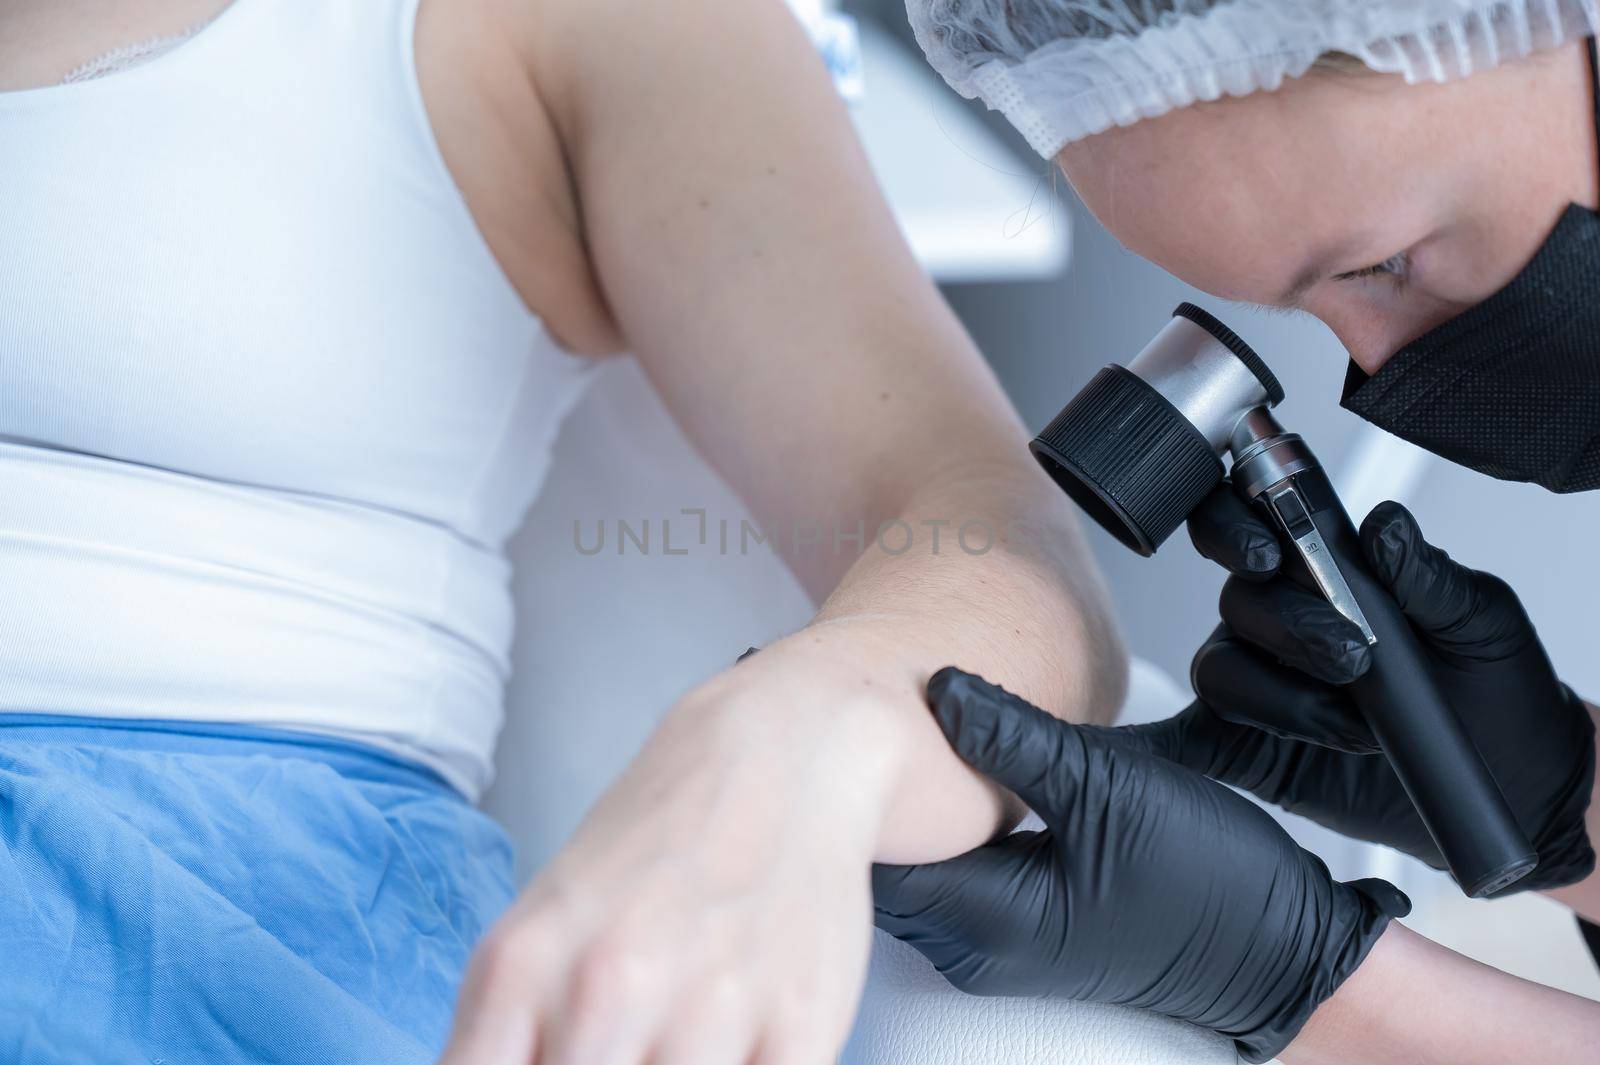 A dermatologist examines a patient's mole through a dermatoscope